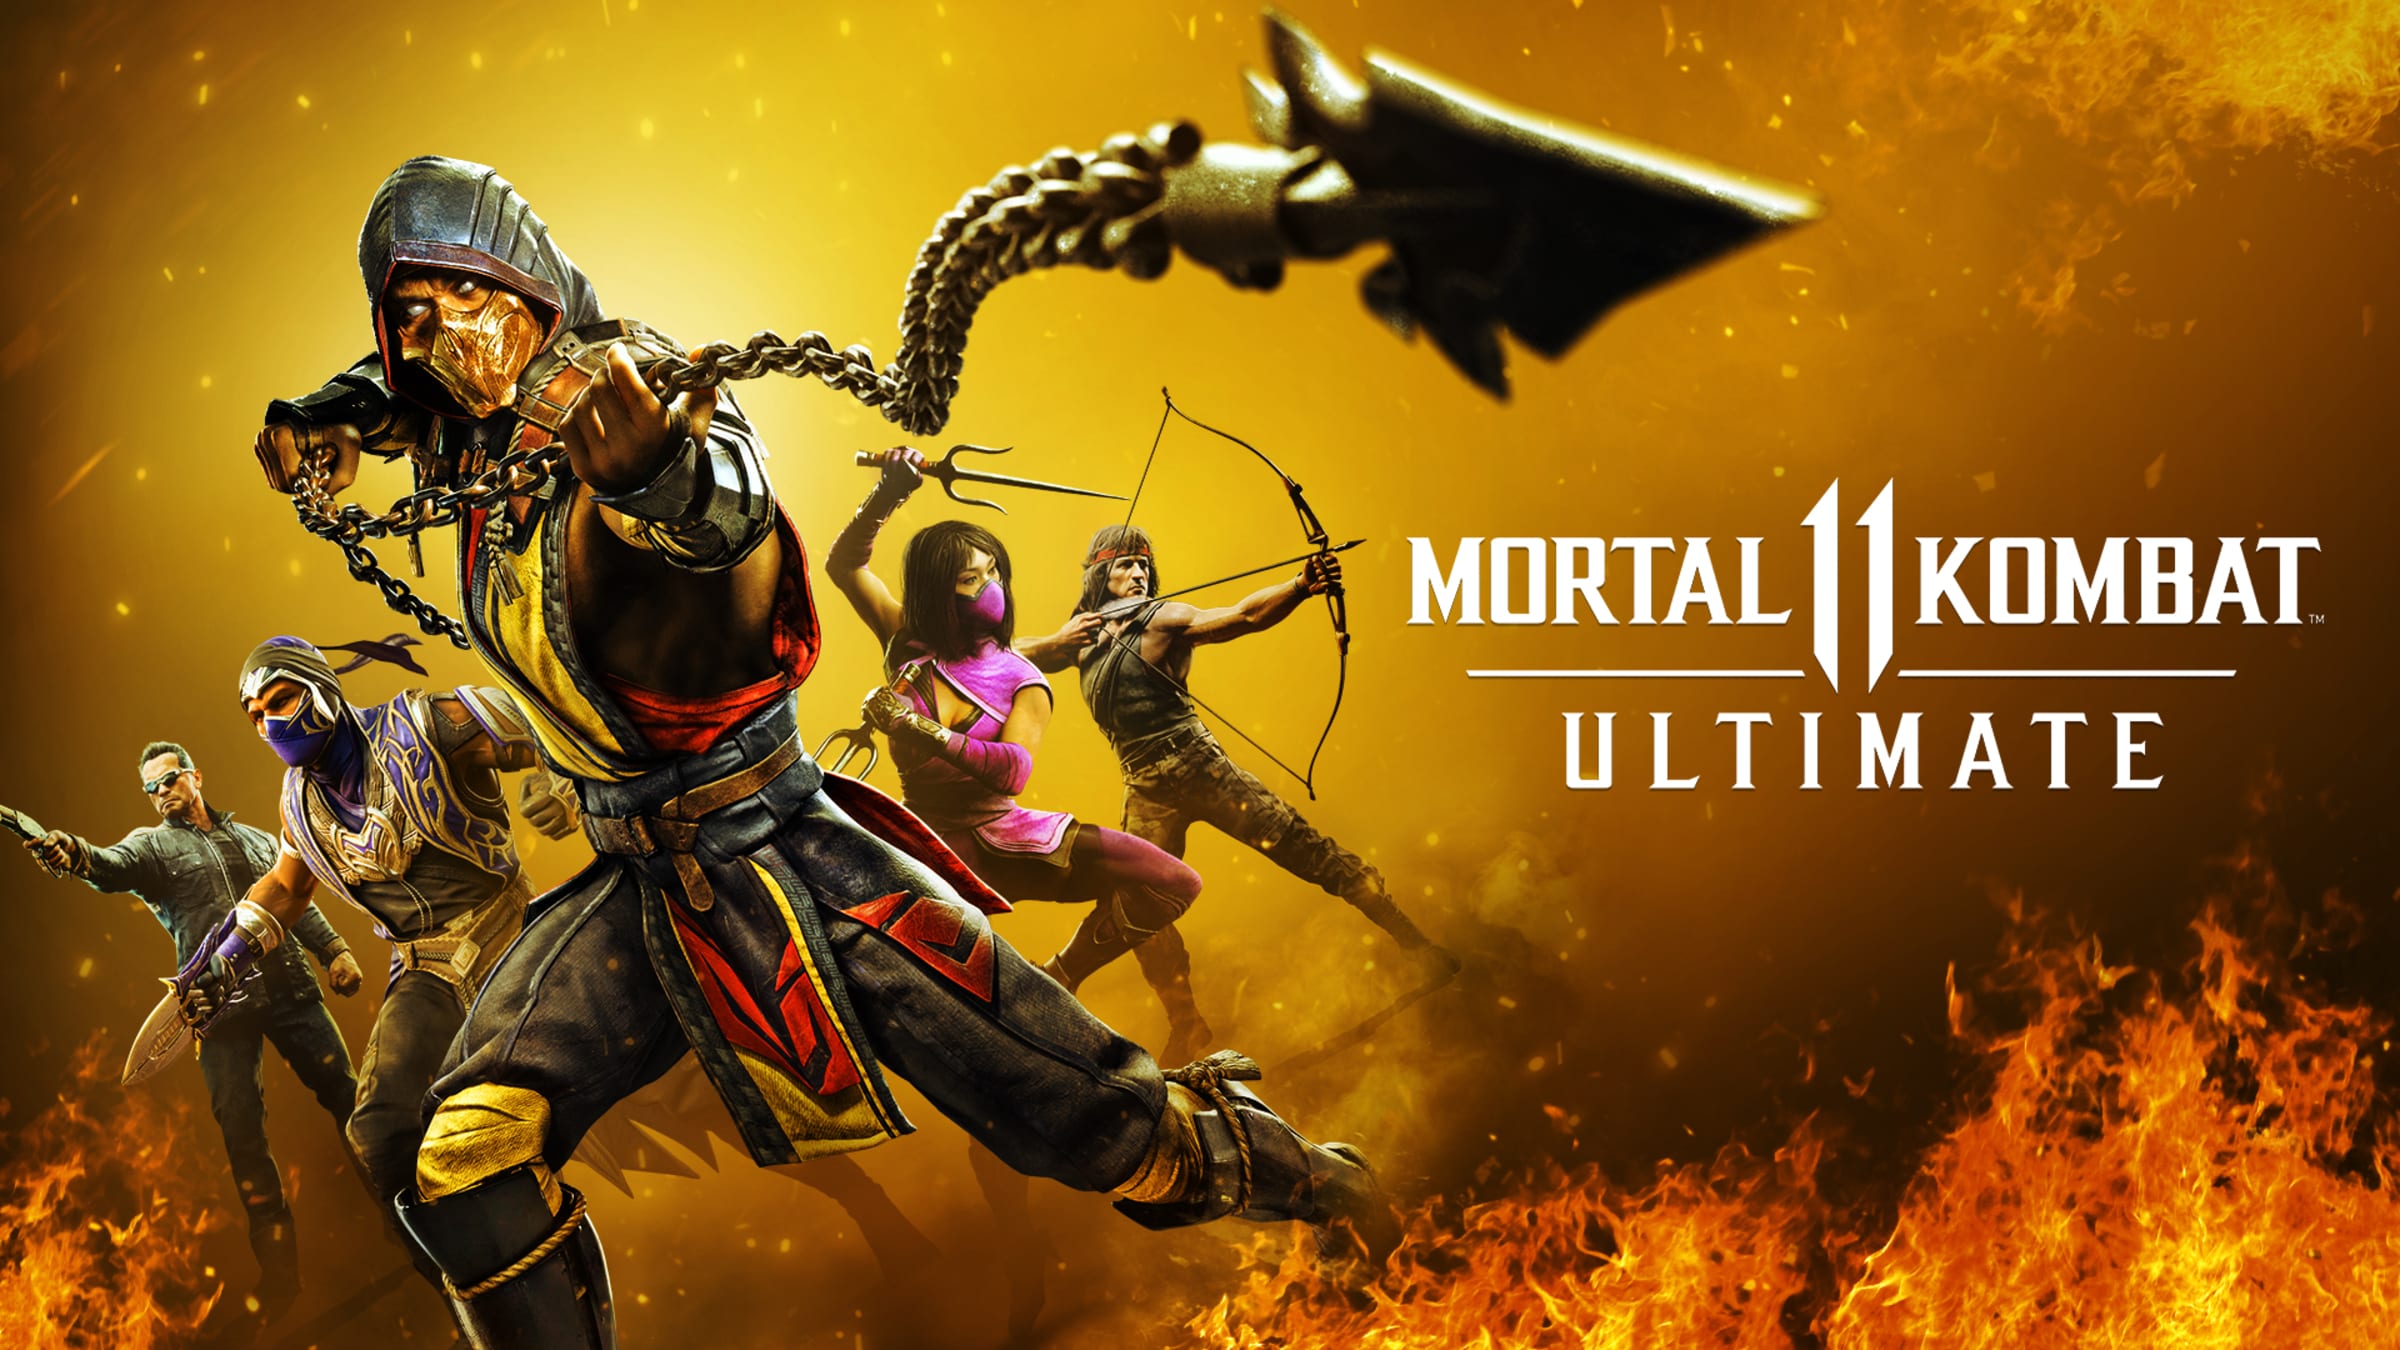 Mortal Kombat 11 Ultimate + Injustice 2 Legendary Edition (PS4/PS5 Digital Download) $10